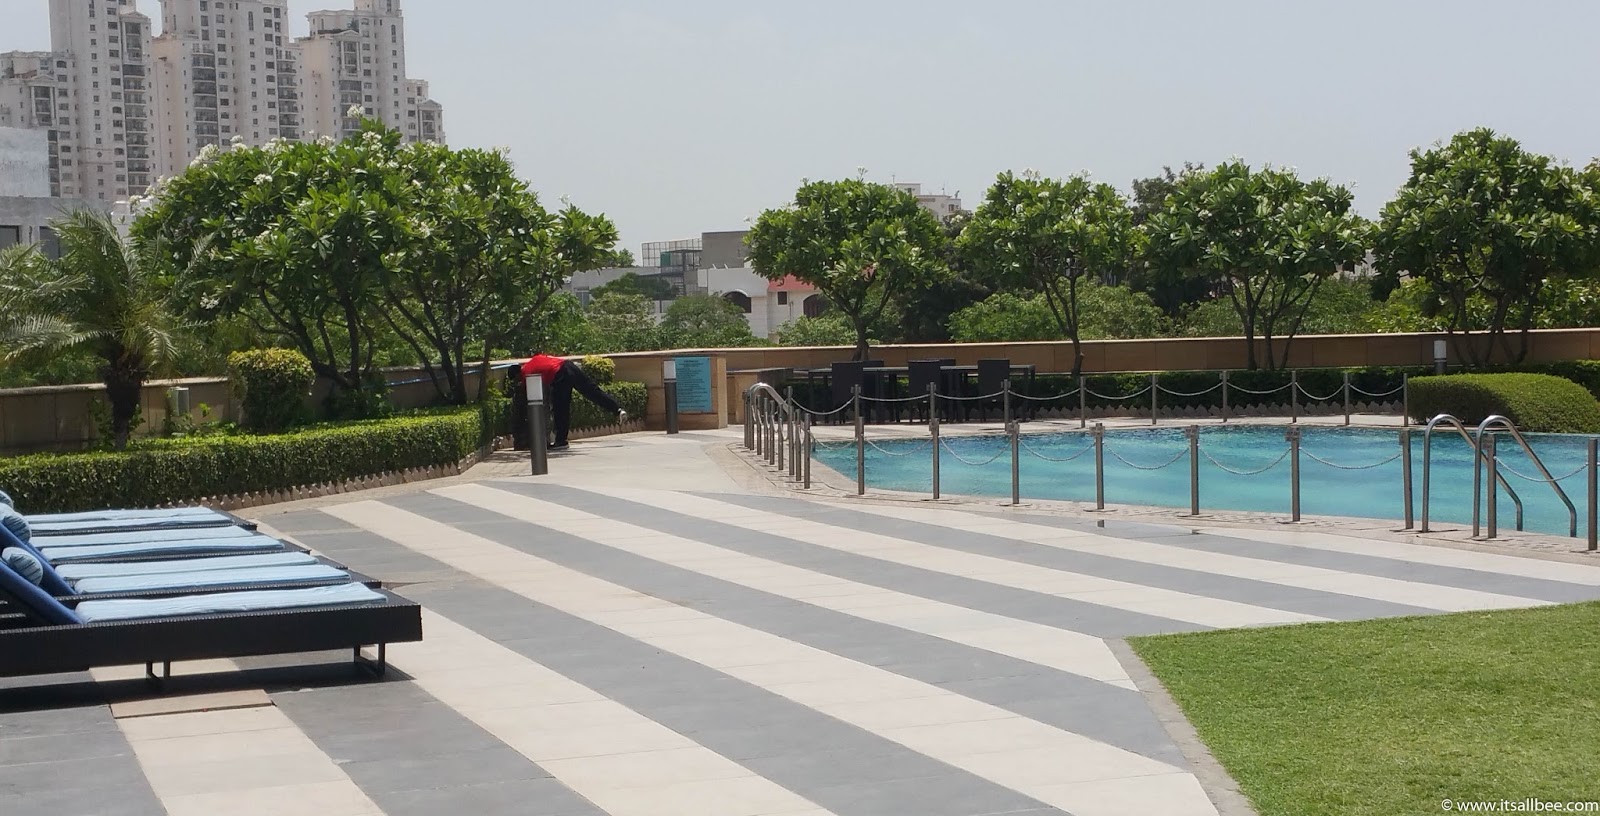 Marriott Courtyard Hotel | Where to Stay In New Delhi | Hotels in New Delhi